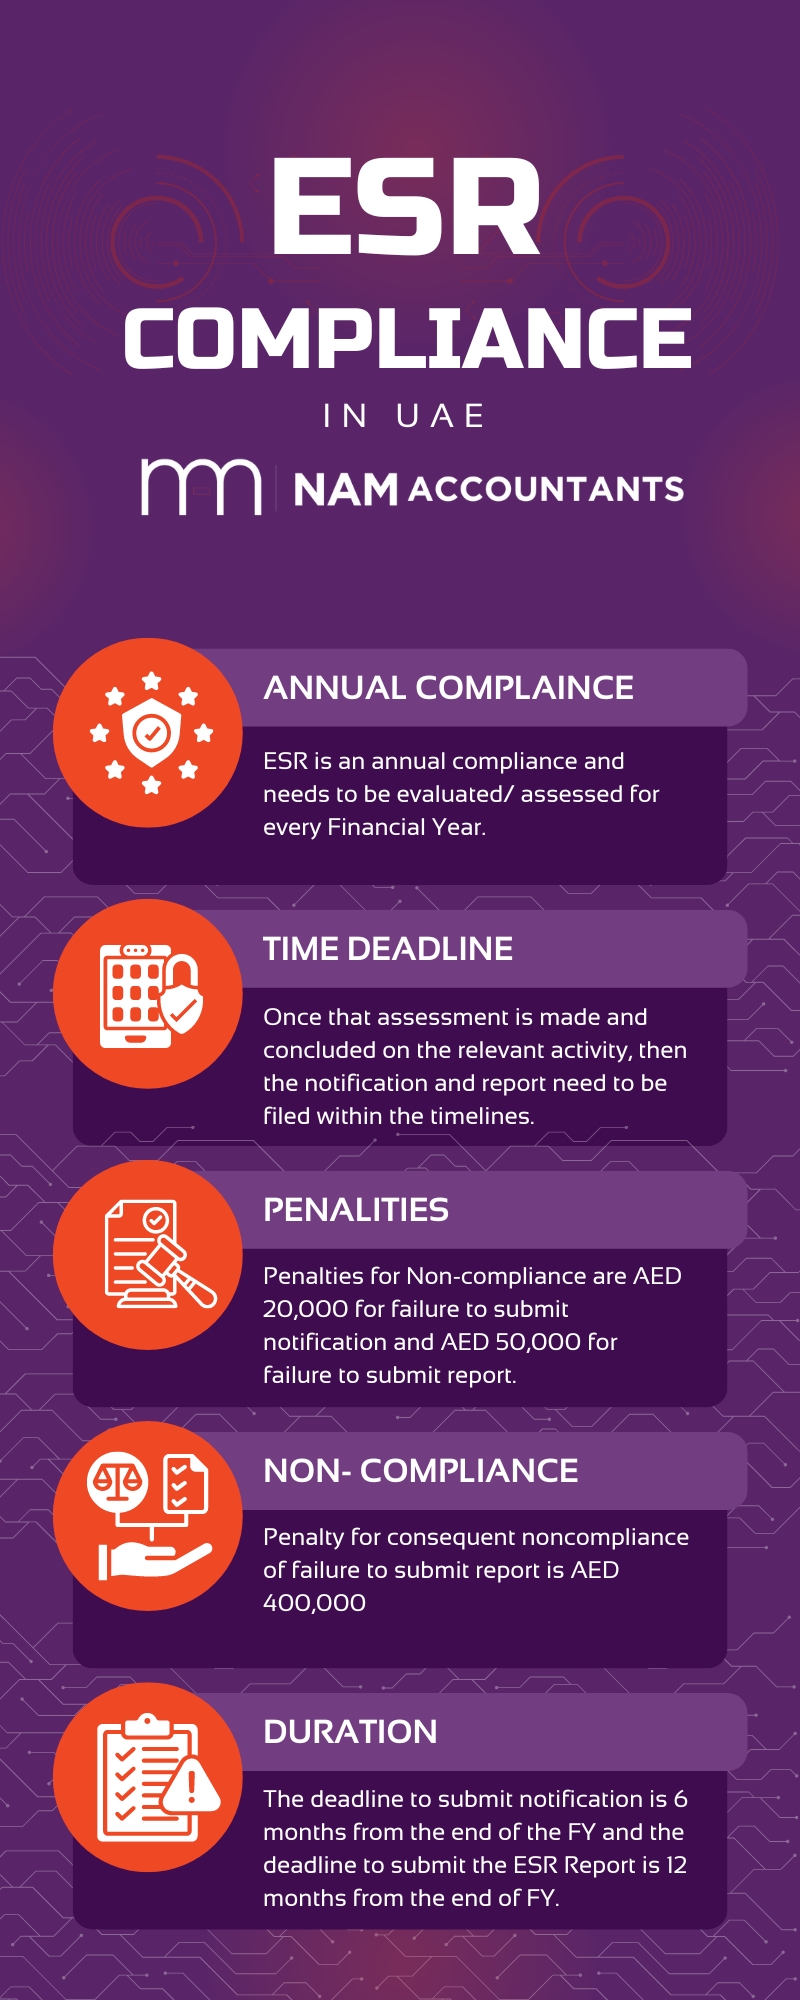 ESR Compliance in UAE